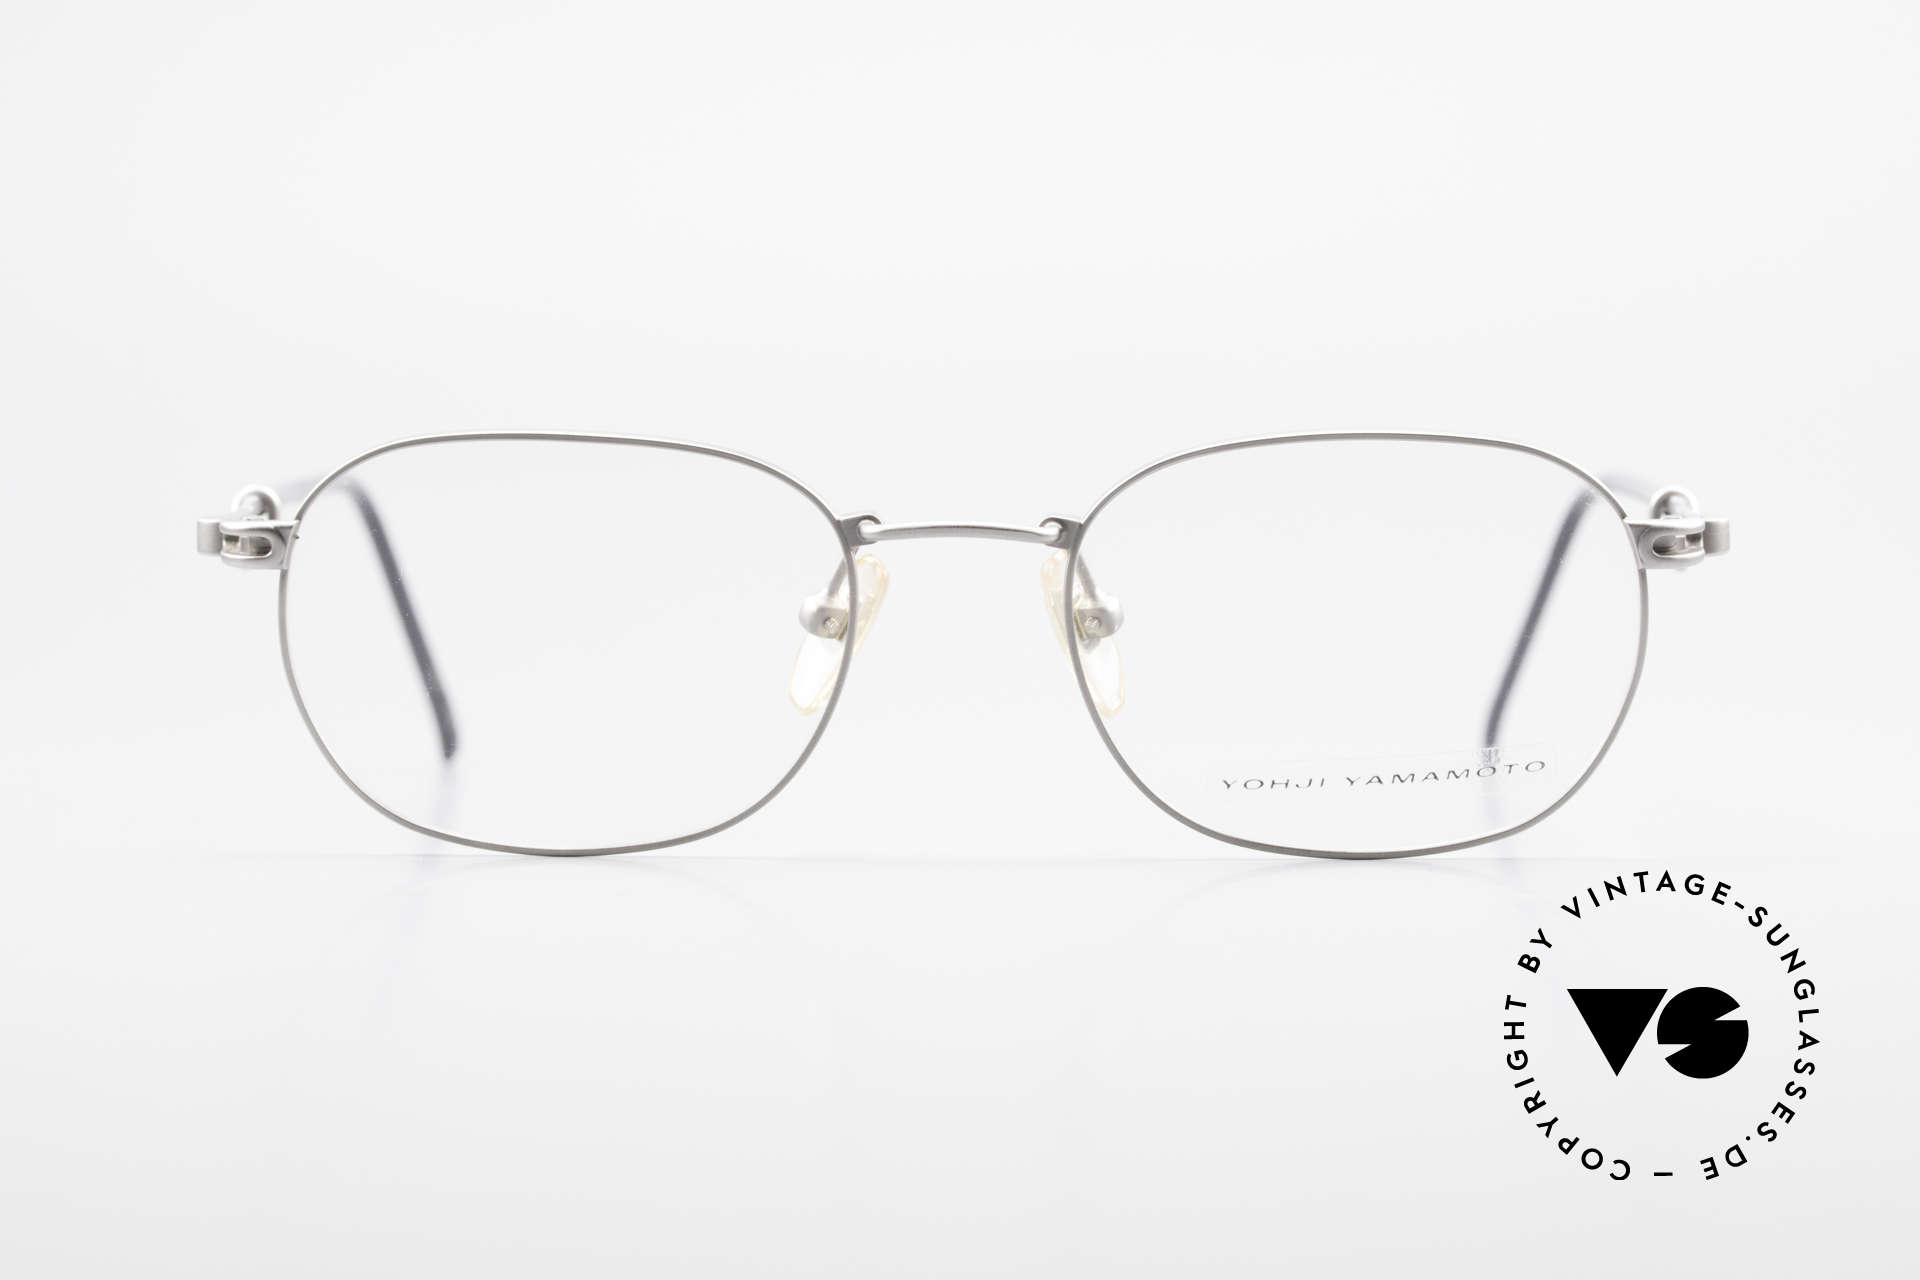 Yohji Yamamoto 51-4113 Titanium Designer Eyeglasses, rather a plain design by the Japanese fashion designer, Made for Men and Women